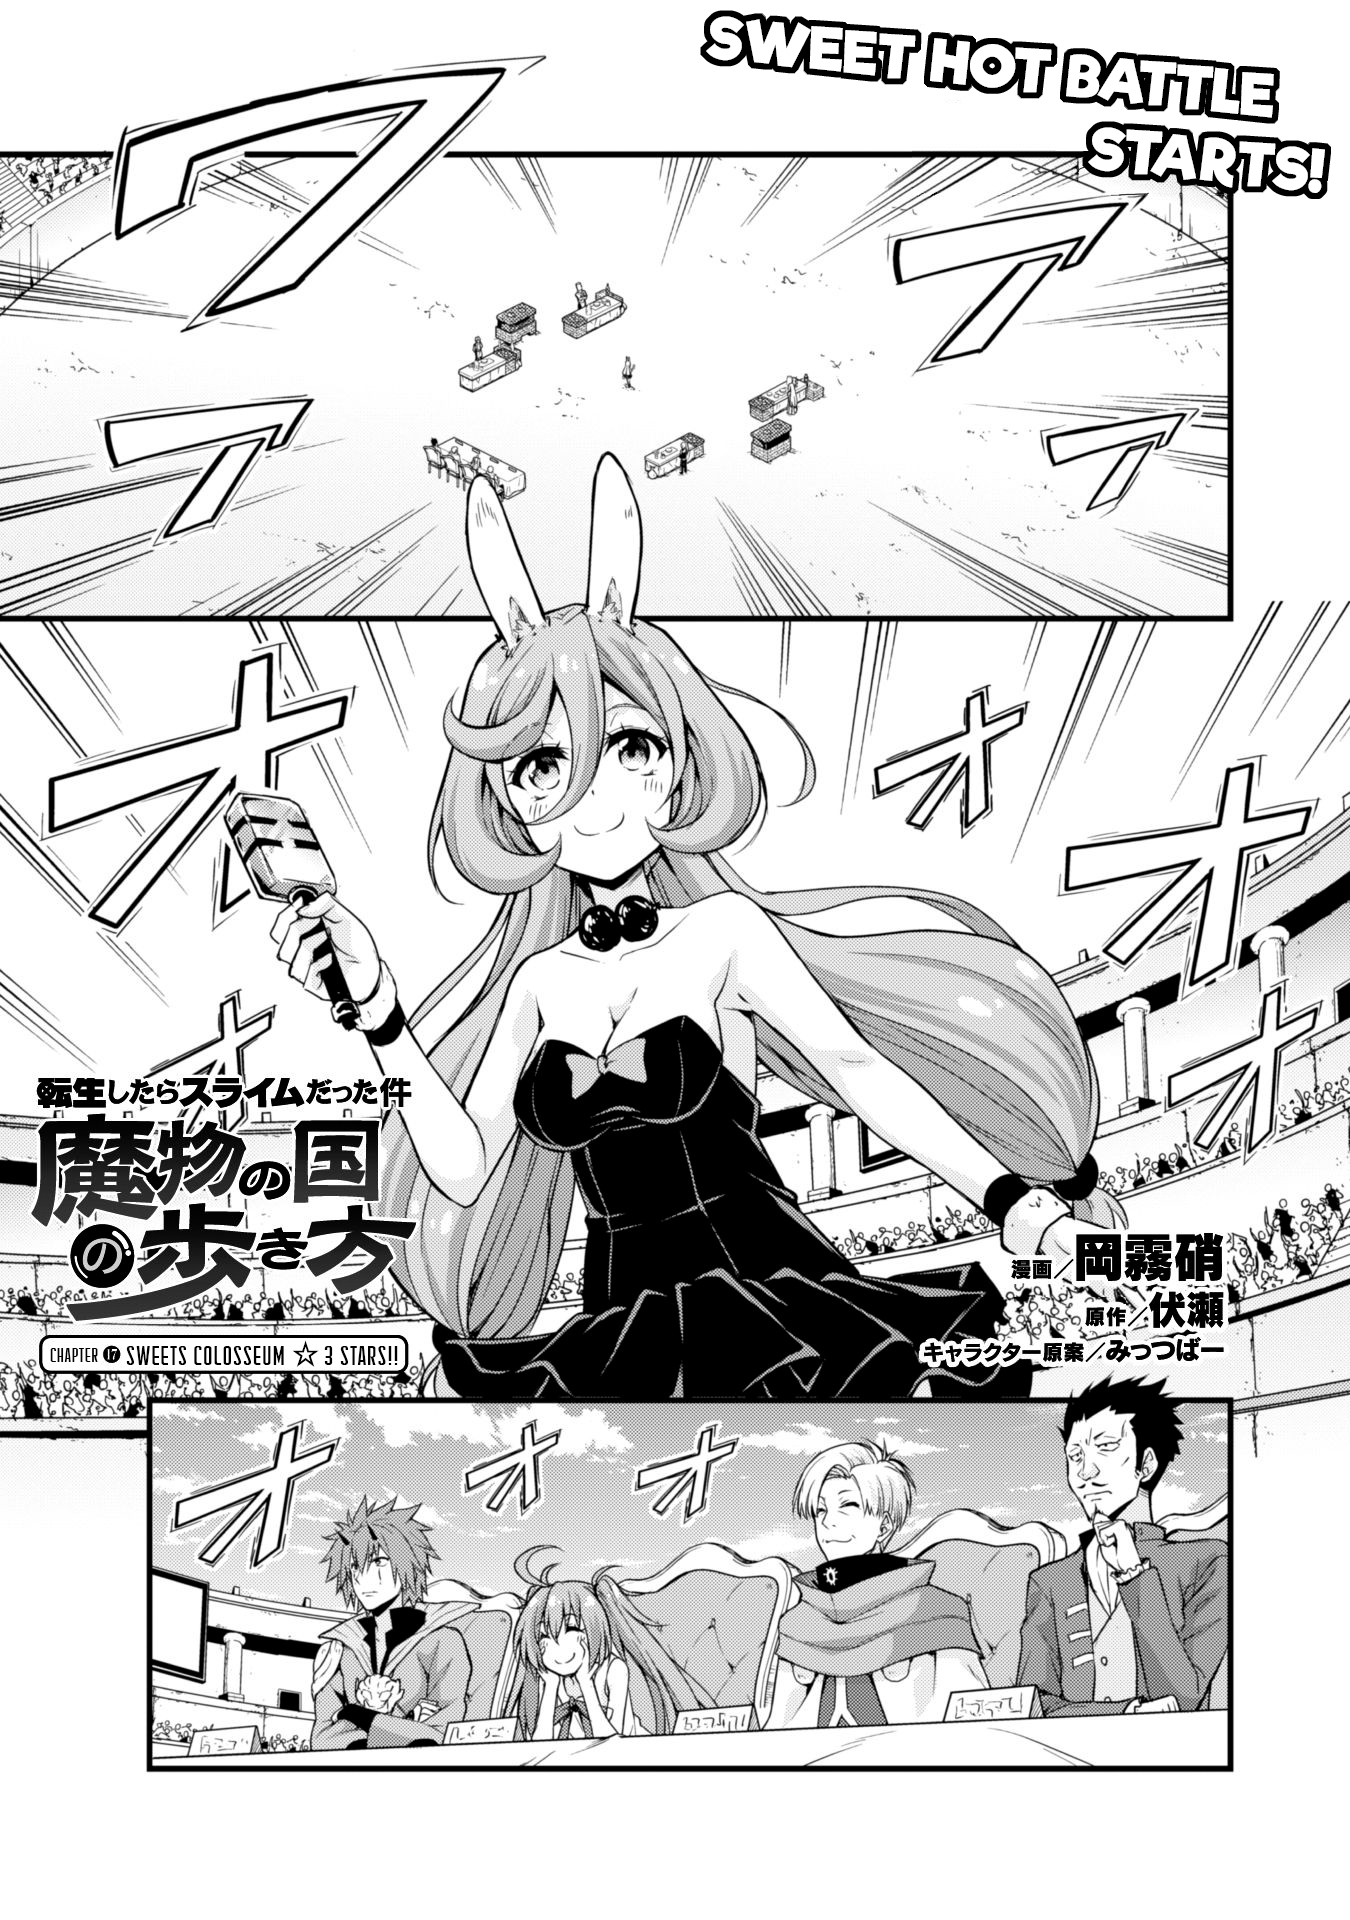 Tensei Shitara Slime Datta Ken: Tempest No Arukikata Vol.3 Chapter 17: Sweets Colosseum ☆ 3 Stars!! - Picture 1